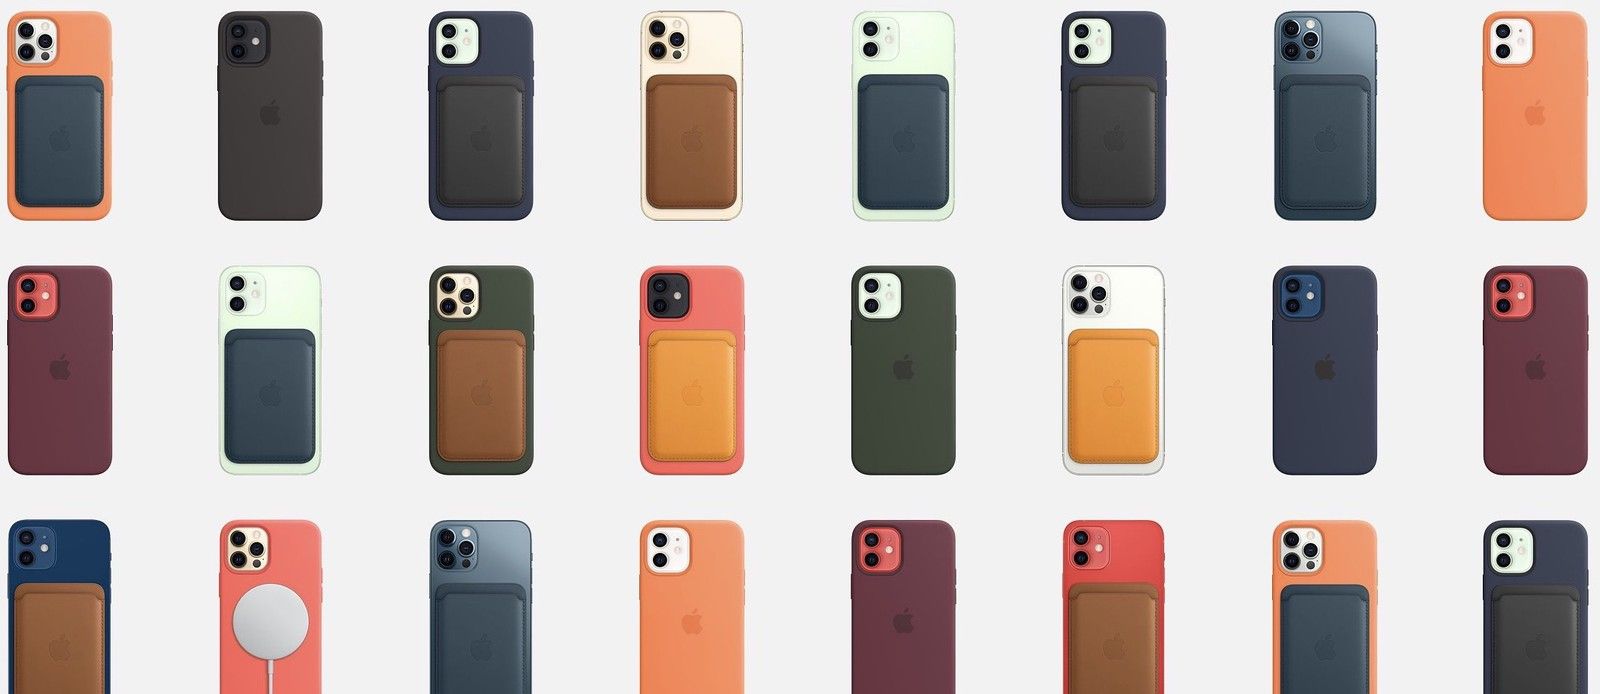 Apple's iPhone 12 cases